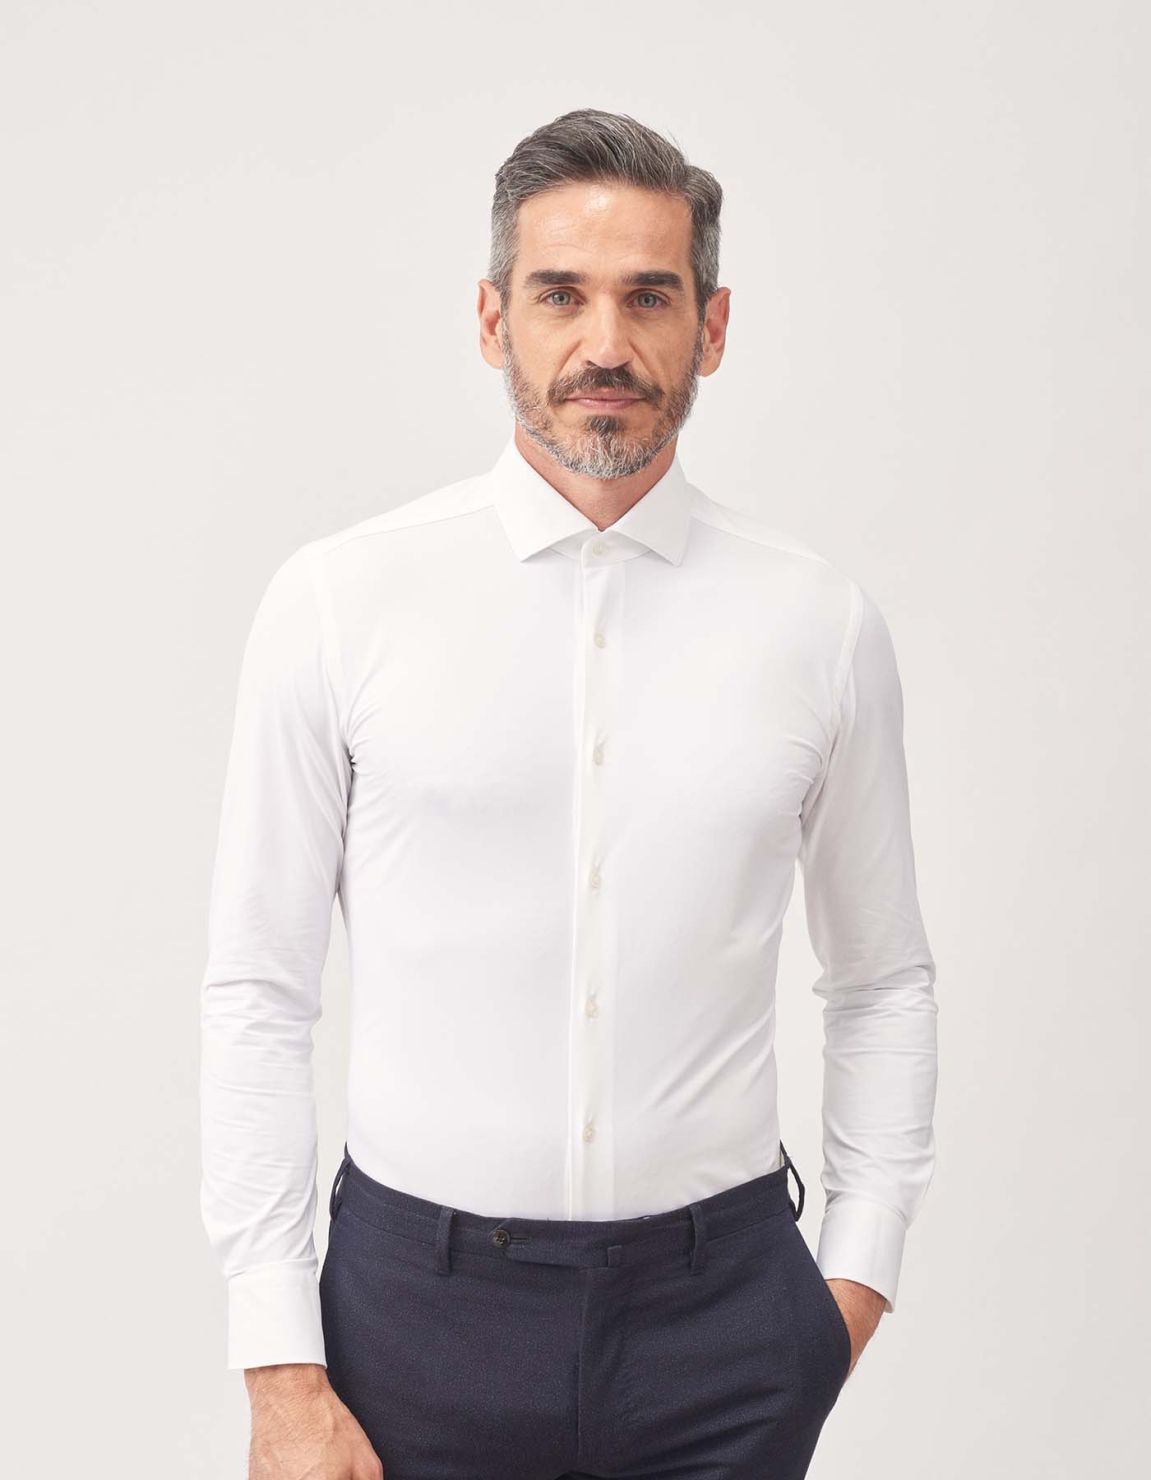 Shirt Collar small cutaway White Twill Slim Fit 6